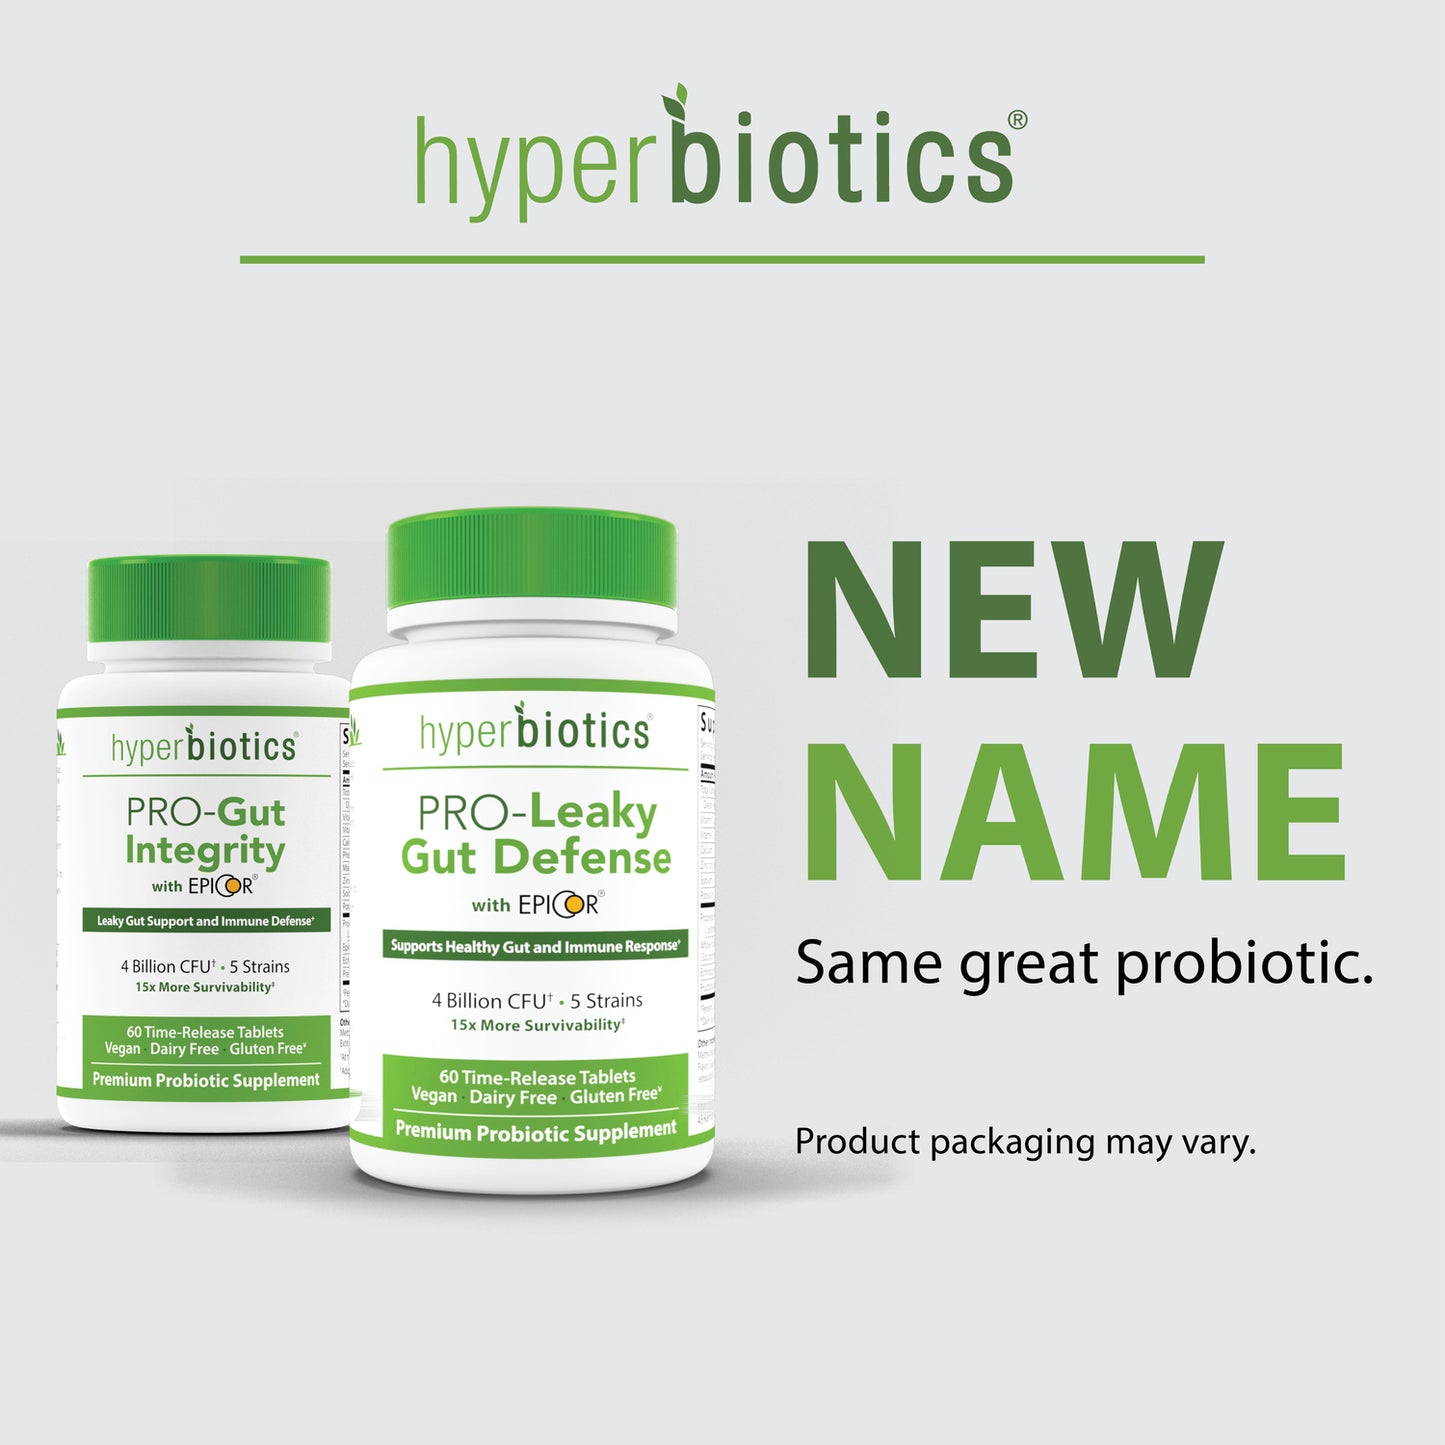 Hyperbiotics PRO-Leaky Gut Defense, New Name for PRO-Gut Integrity.